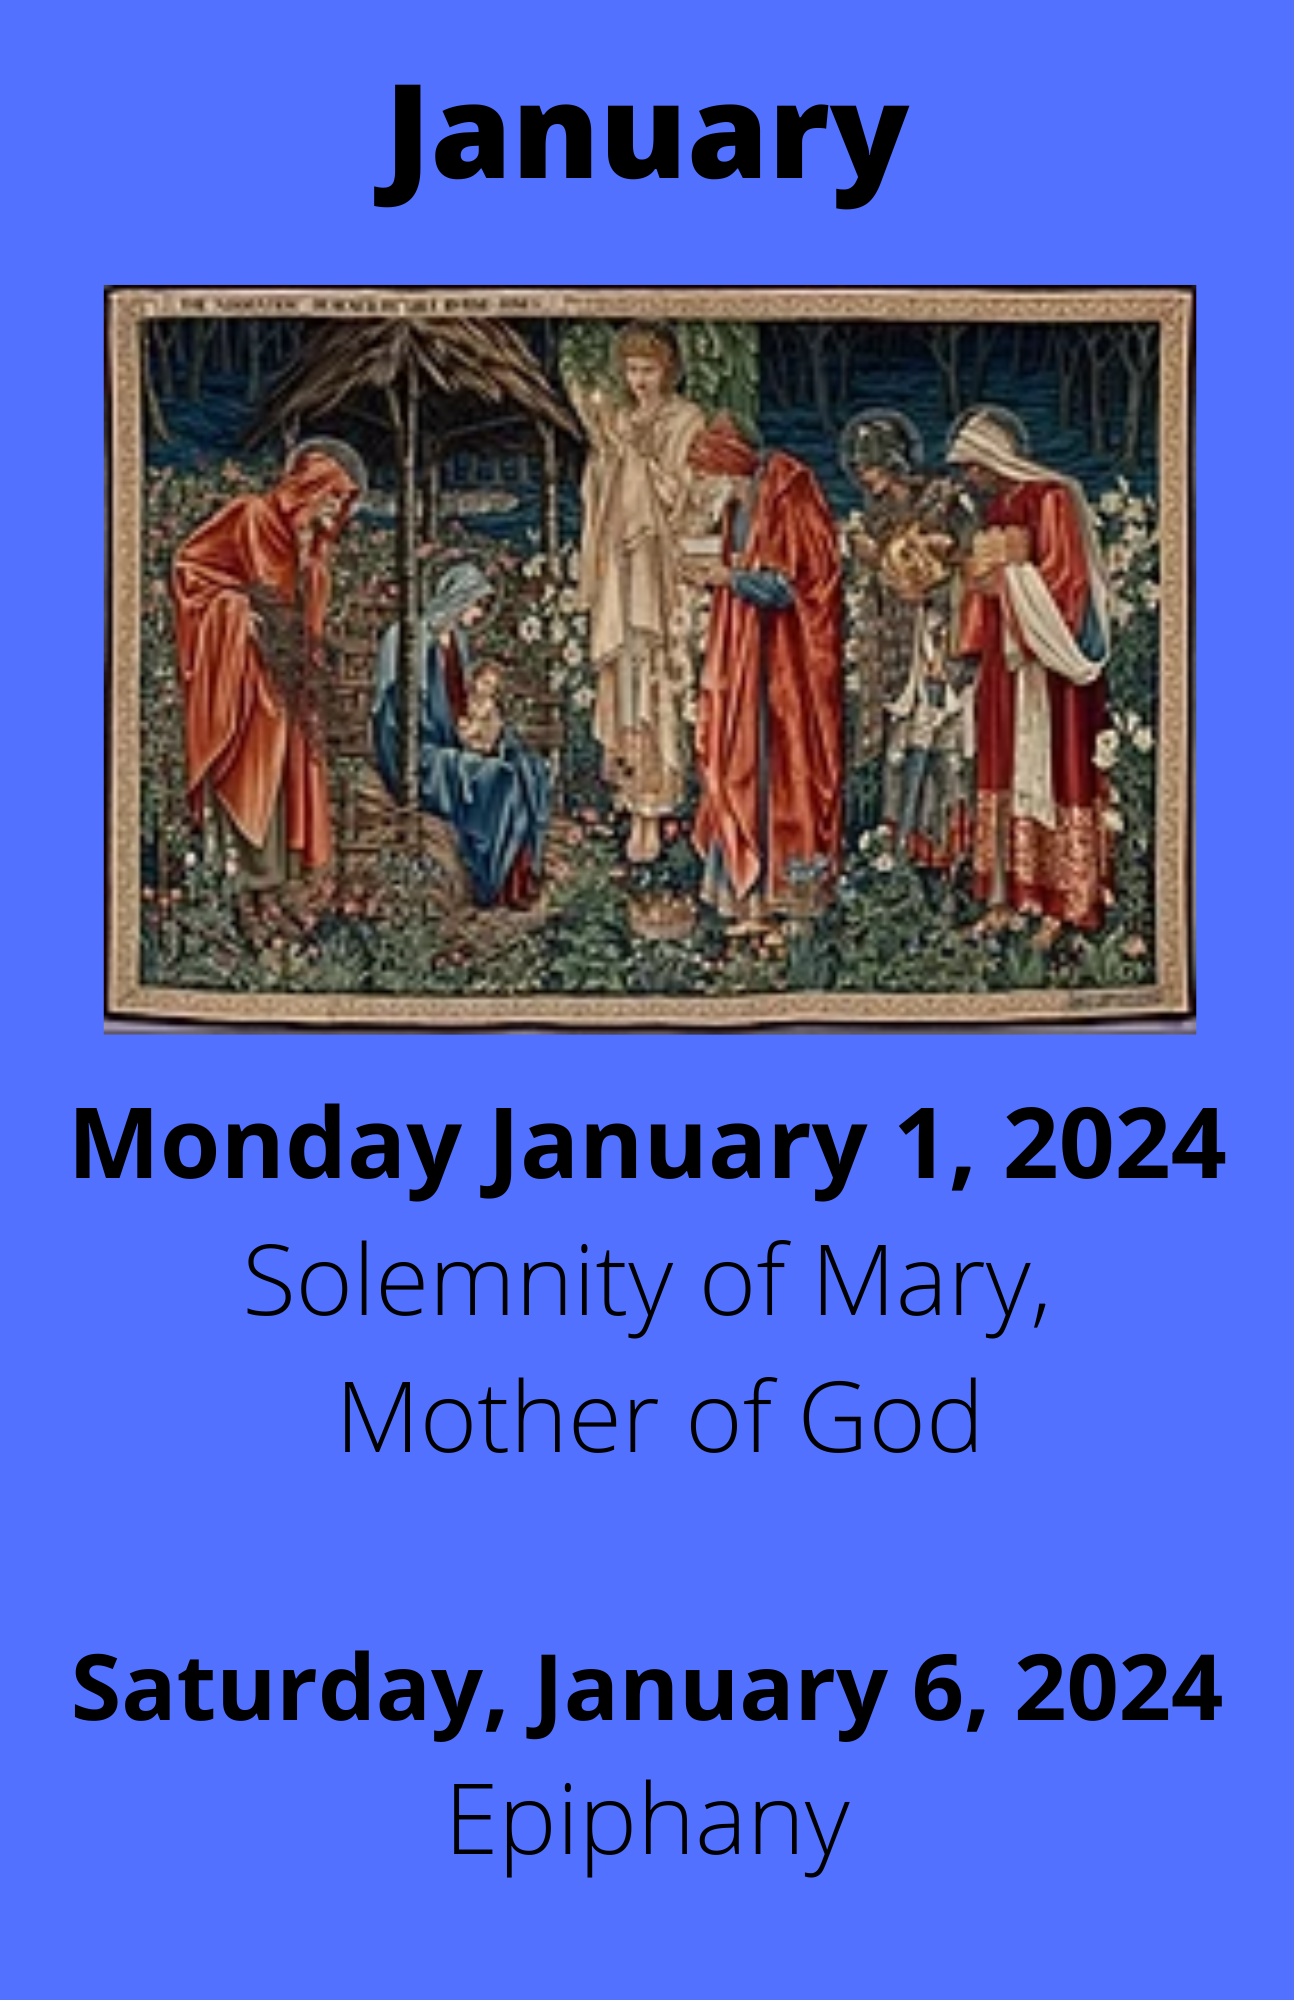 January Holy Days